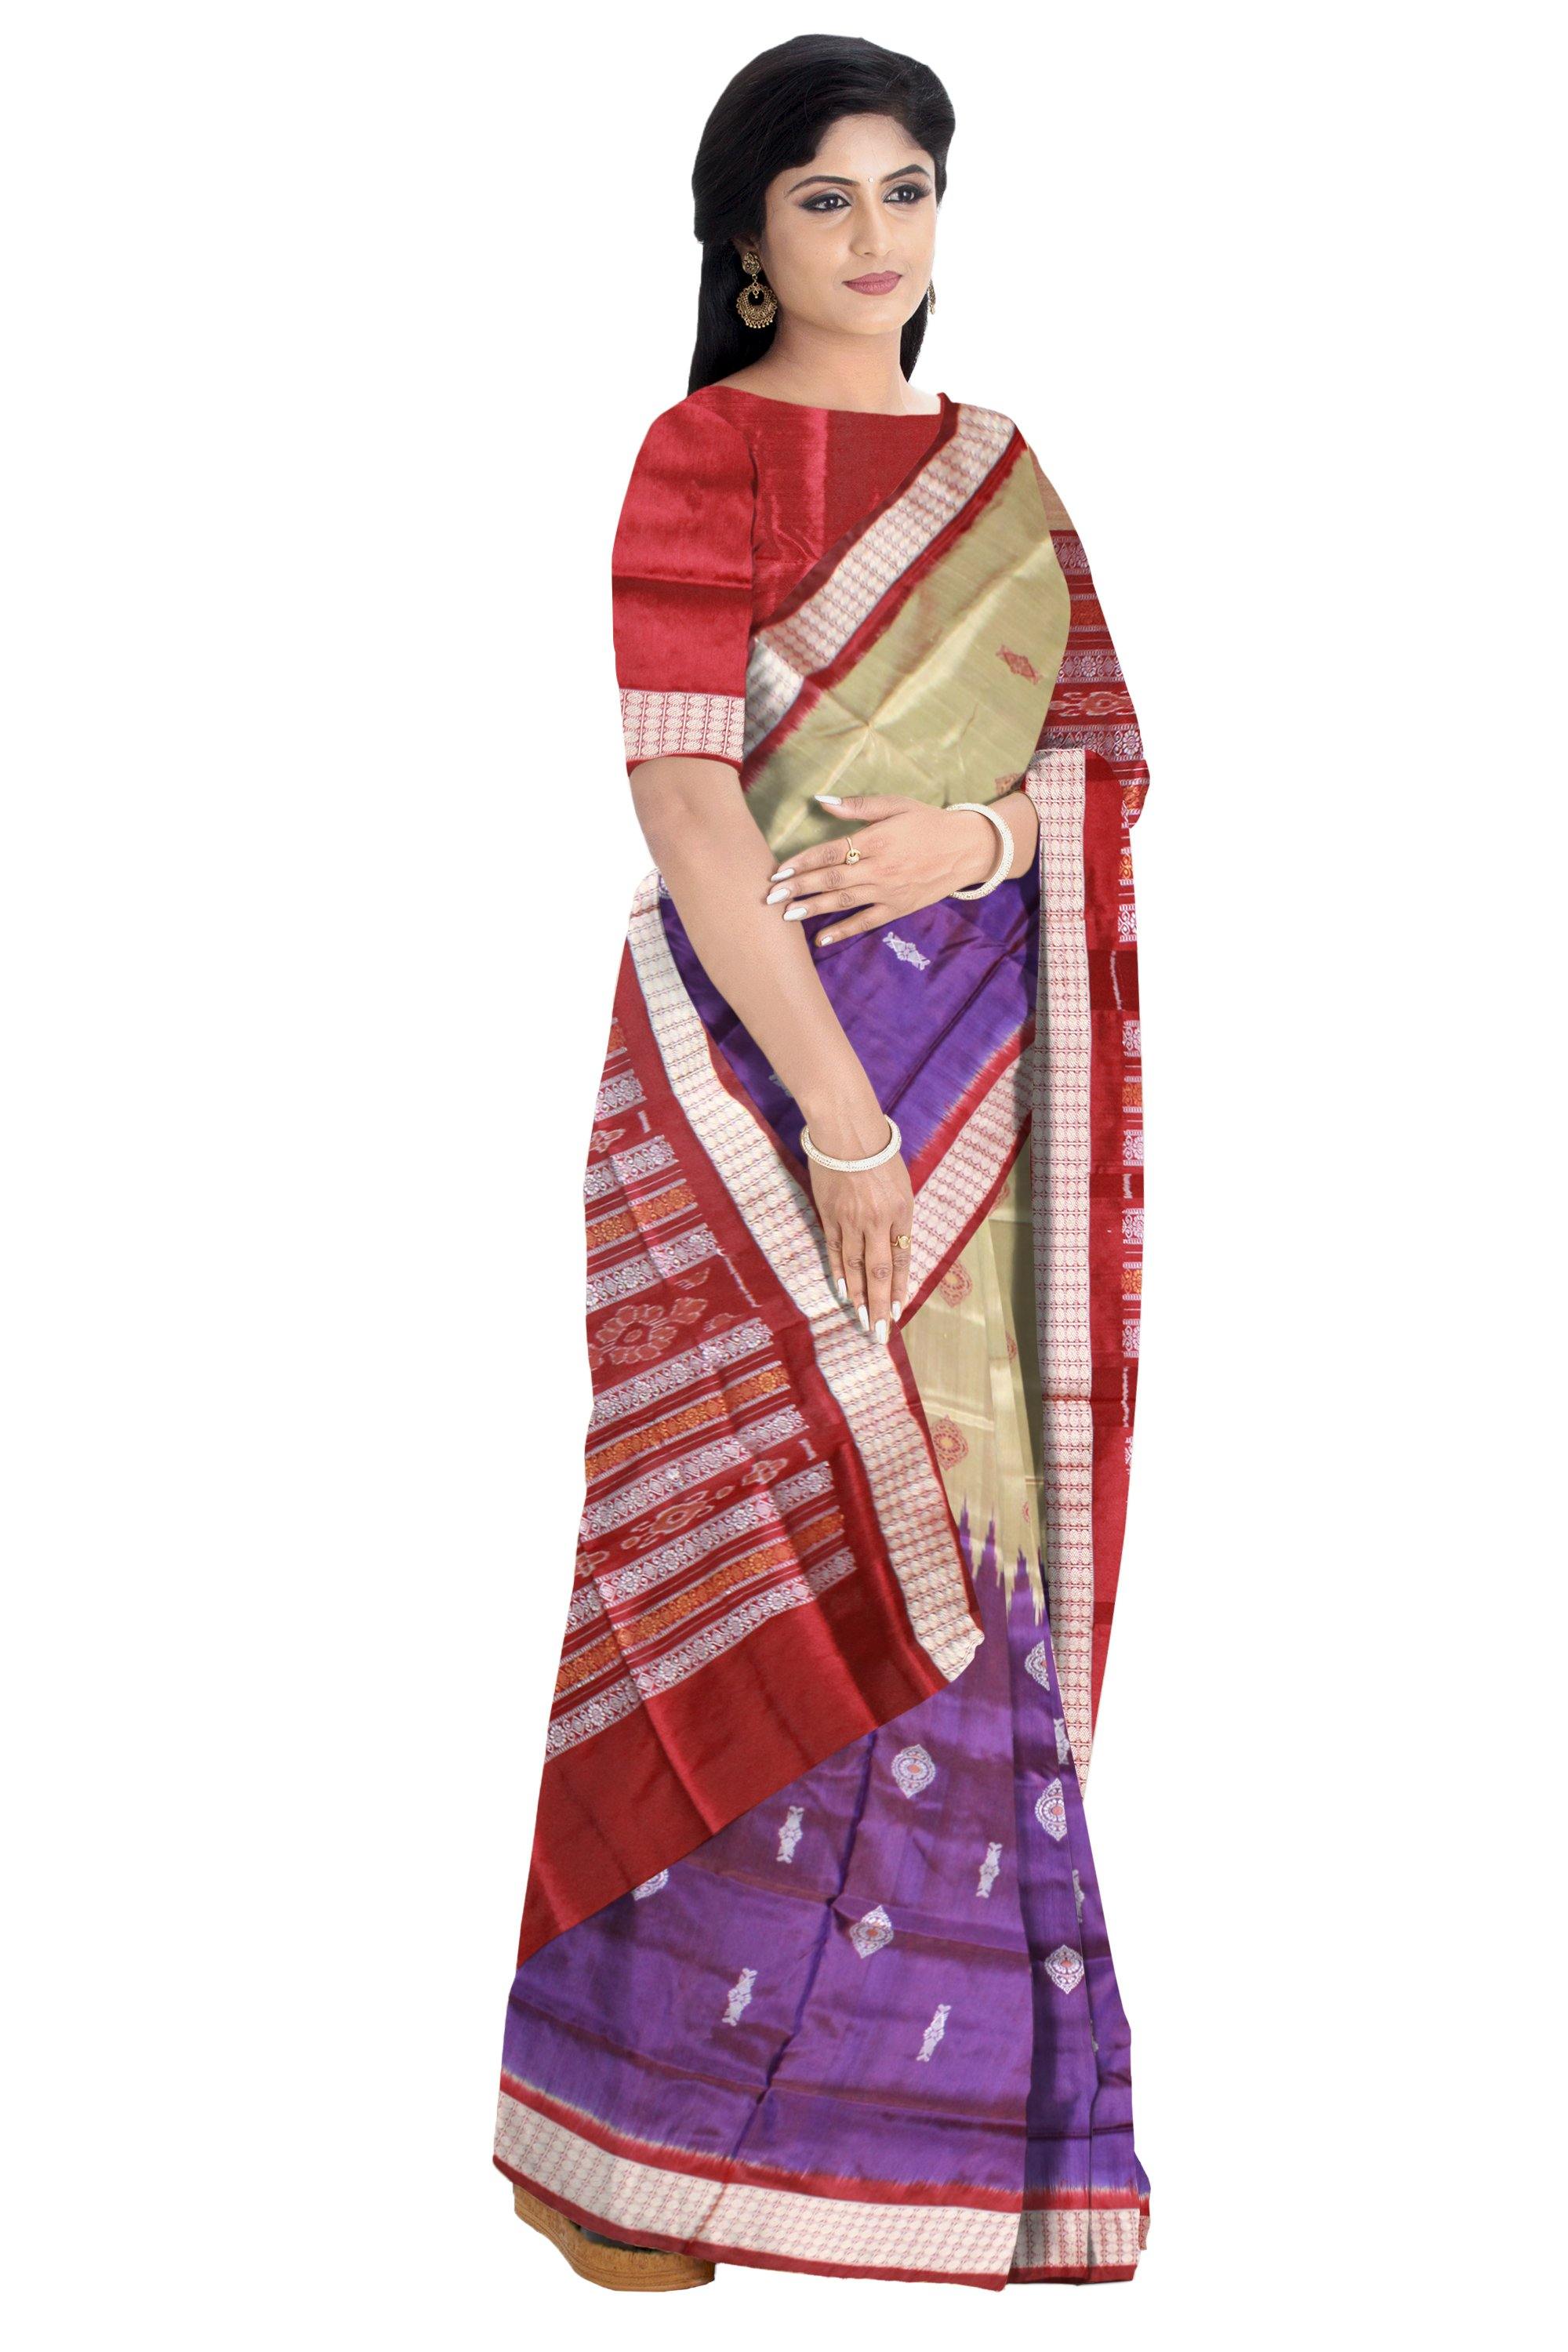 2d Gray and violate color, Bomkei Pata saree with blouse piece. - Koshali Arts & Crafts Enterprise